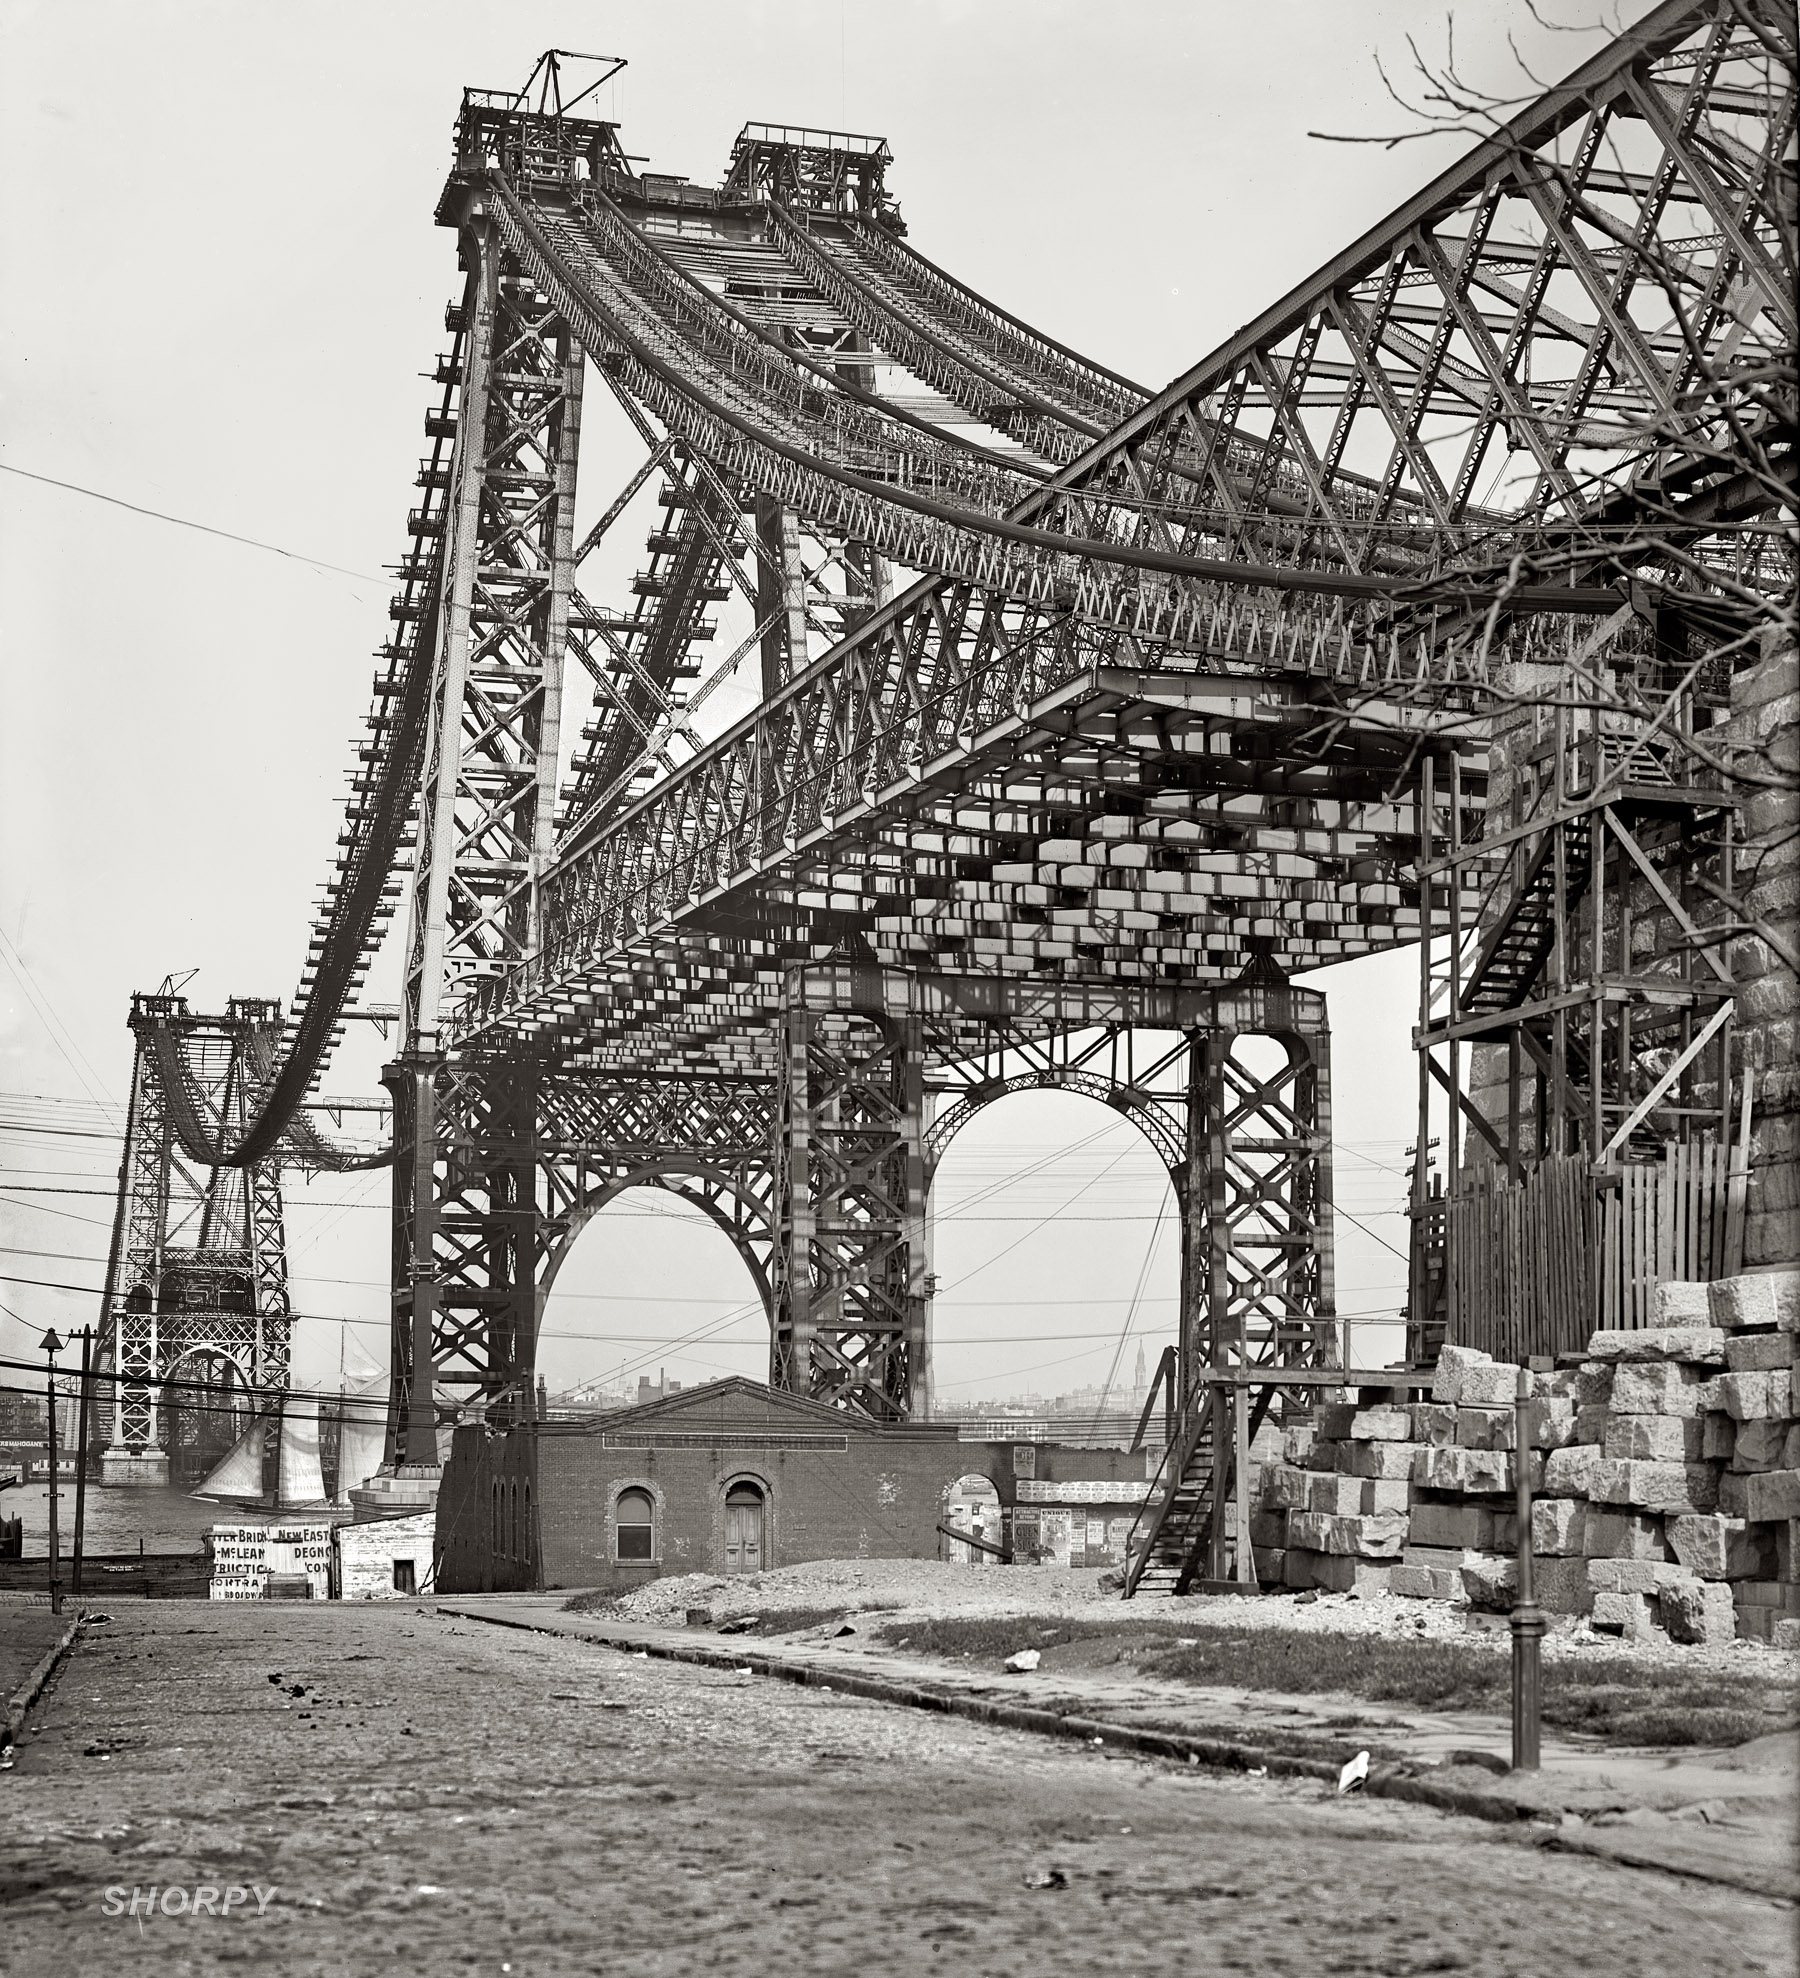 "New East River bridge from Brooklyn." The Williamsburg Bridge under construction circa 1902. Detroit Publishing Co. glass negative. View full size.